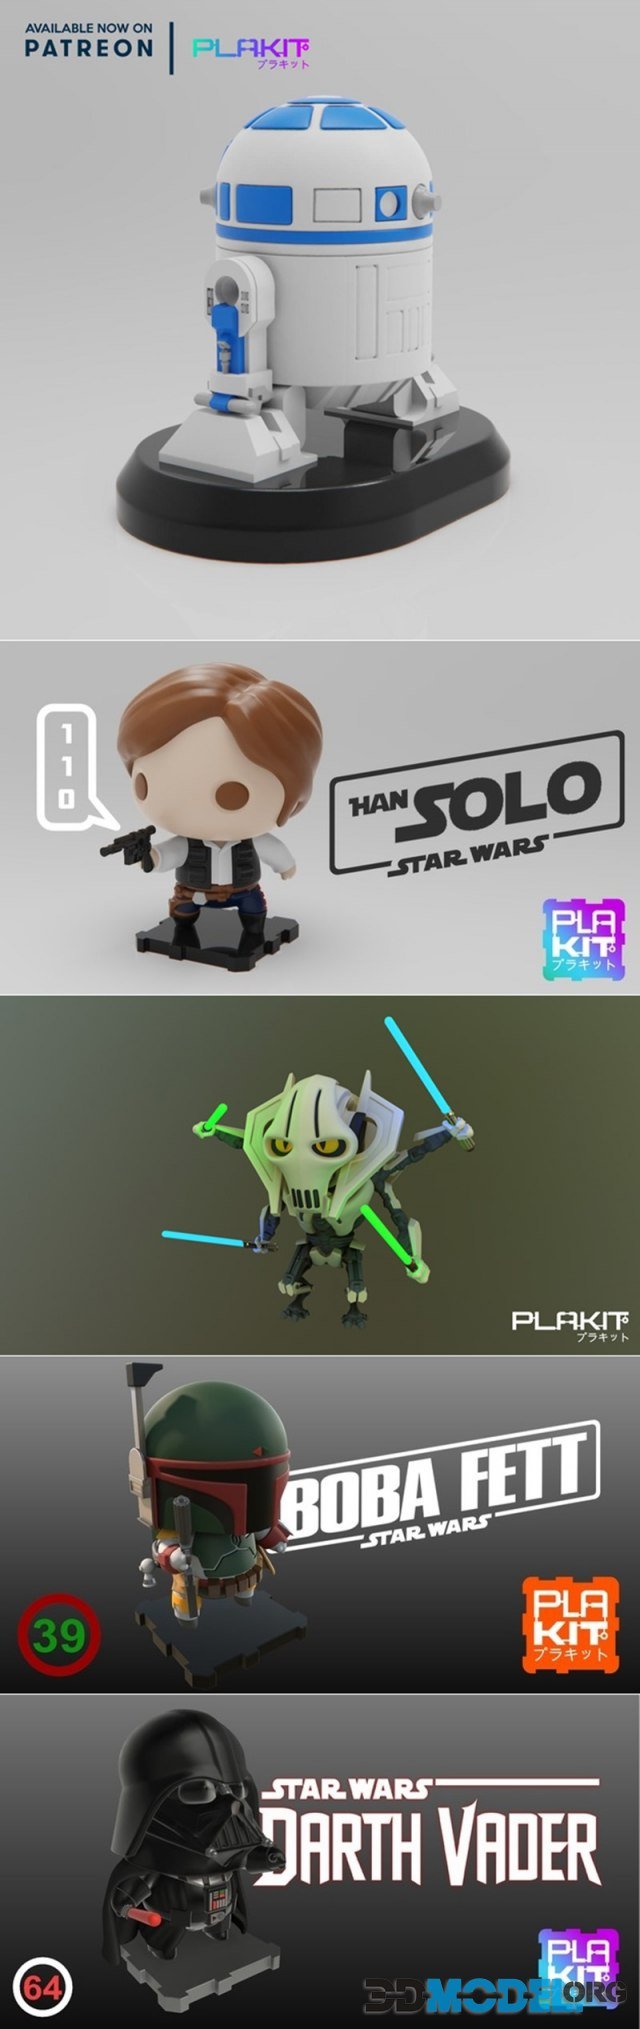 Plakit Star Wars Pack 2 – Printable